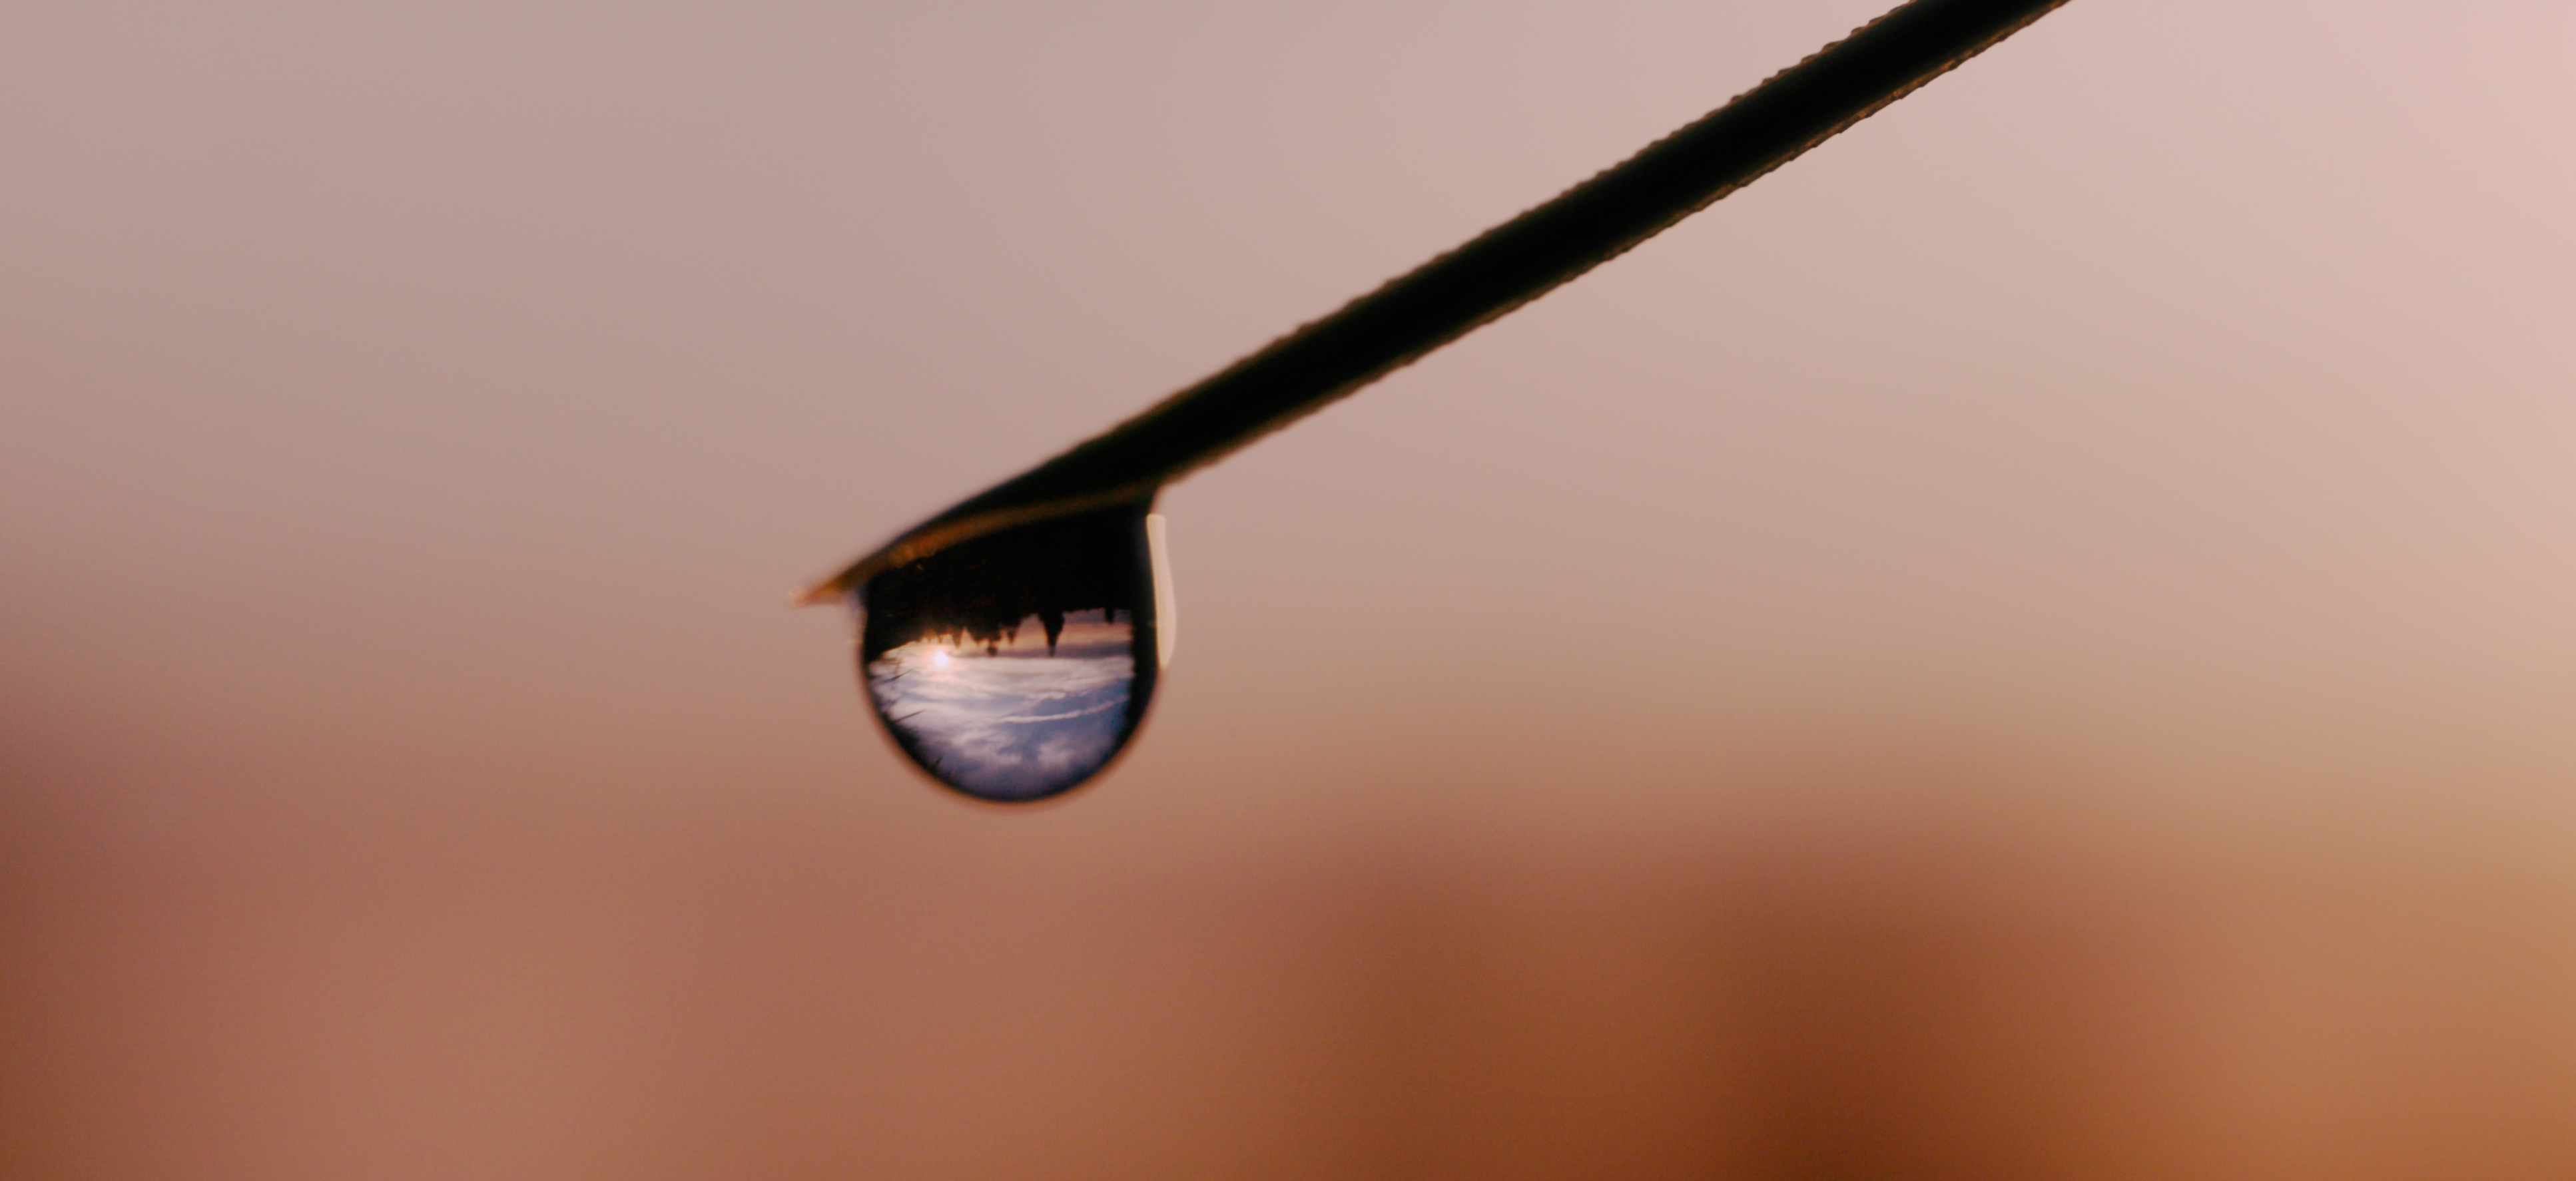 A dew drop at dusk reflecting its surrounding landscape